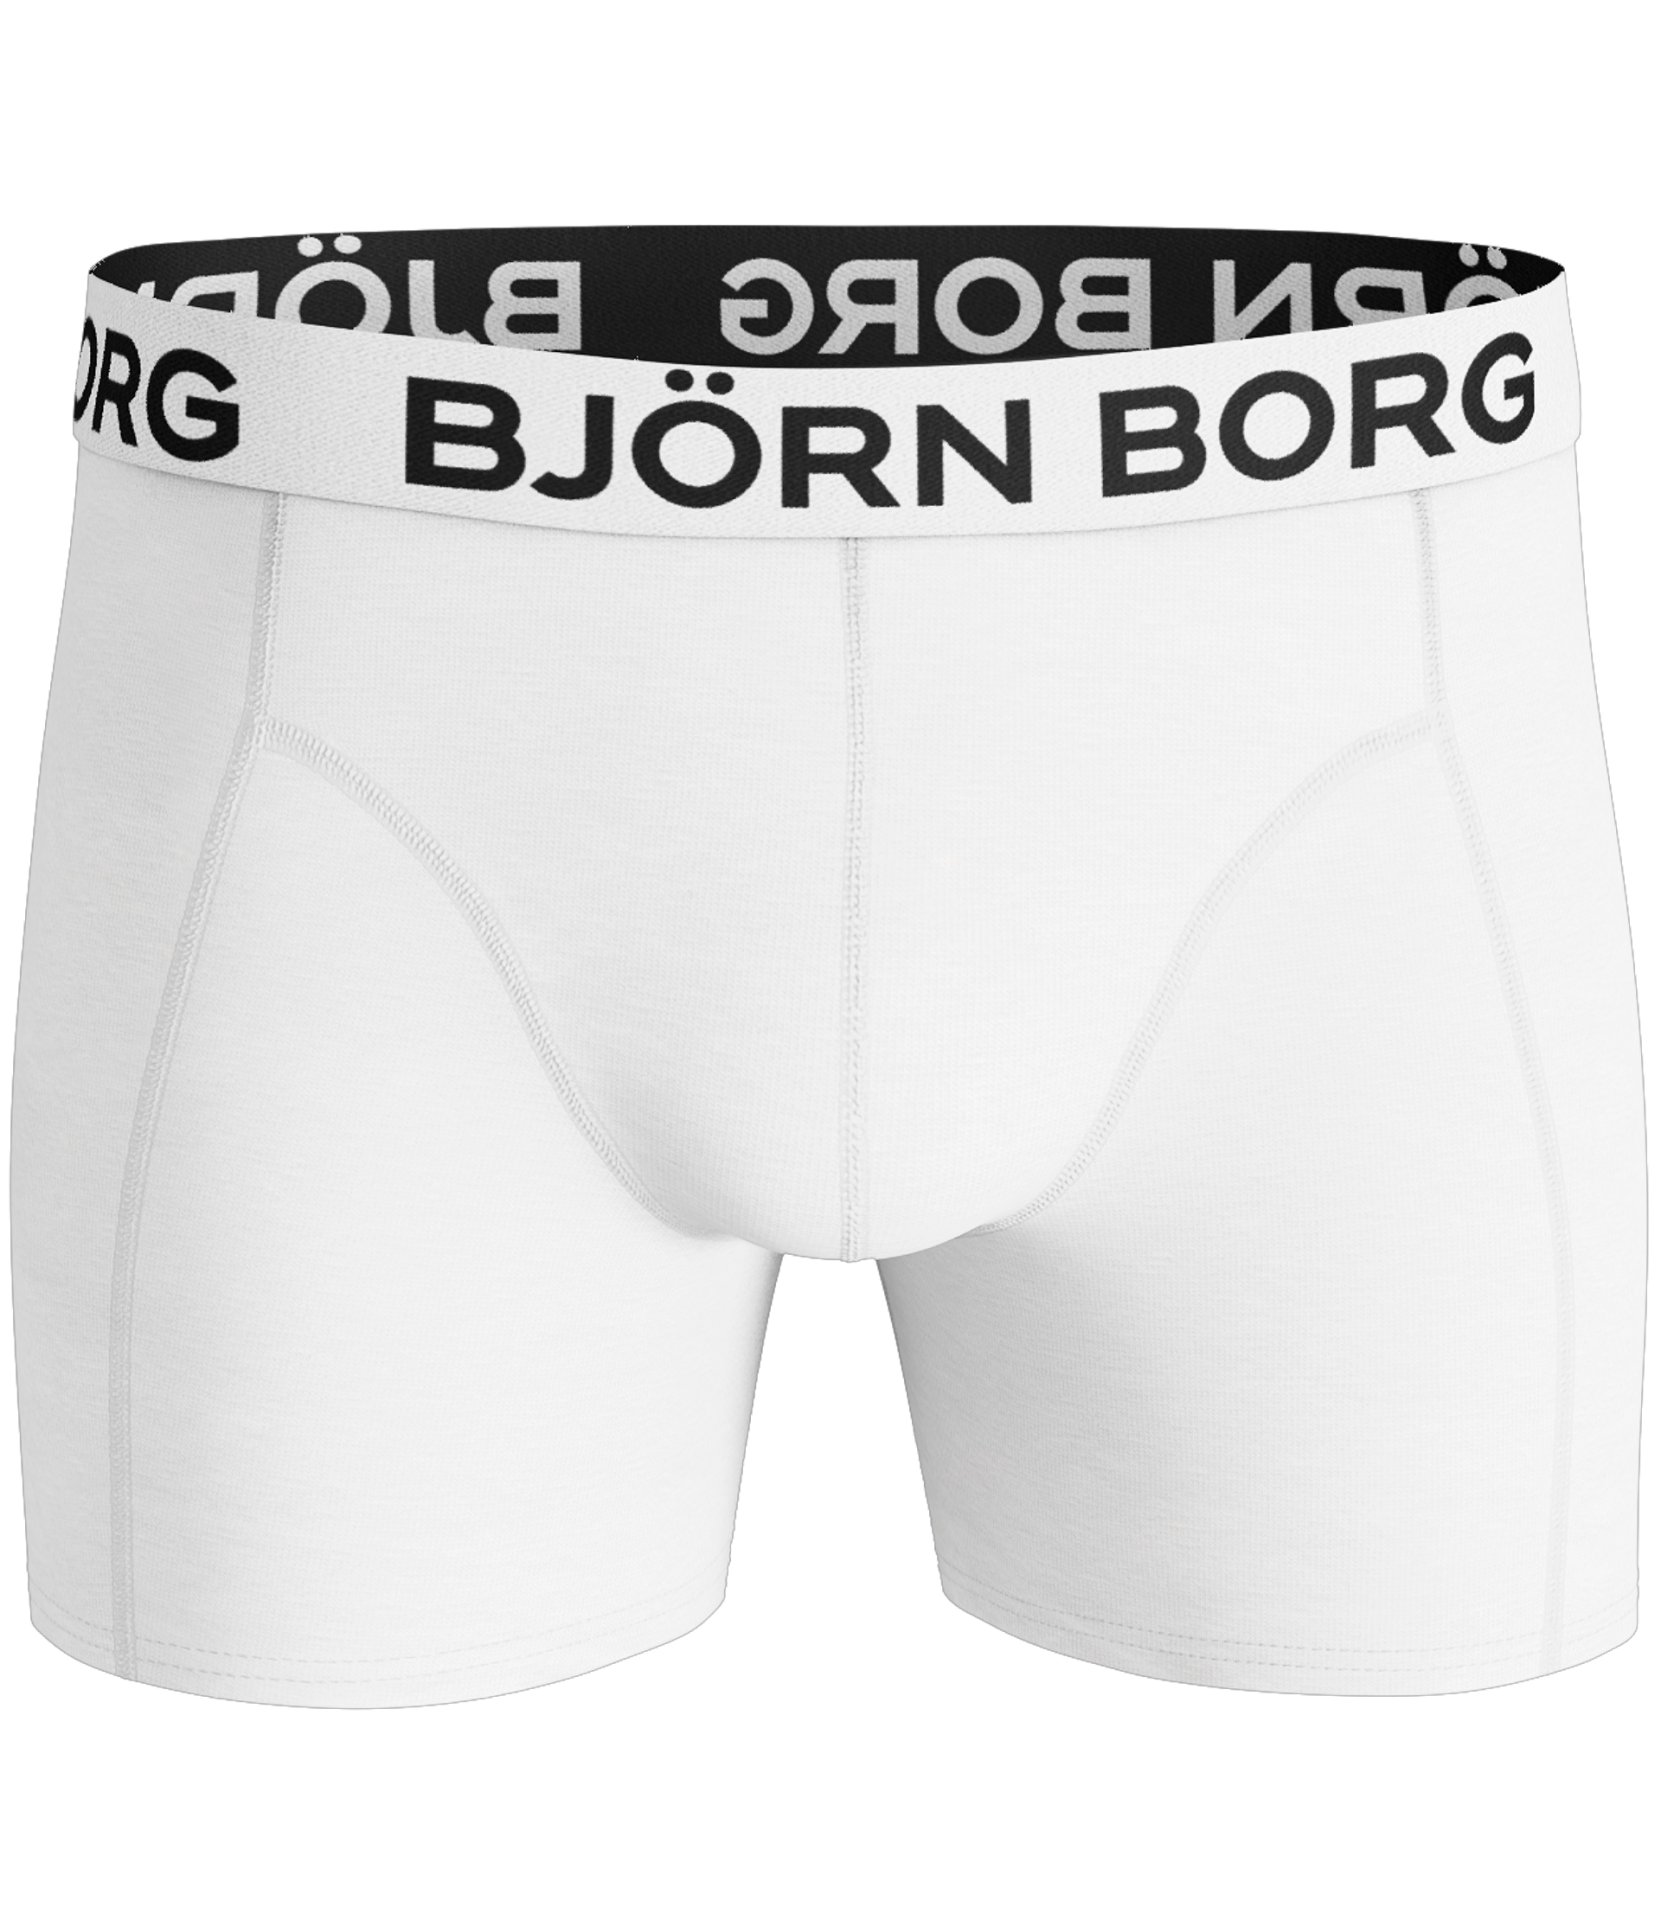 Bjorn Borg 2-pack NOS